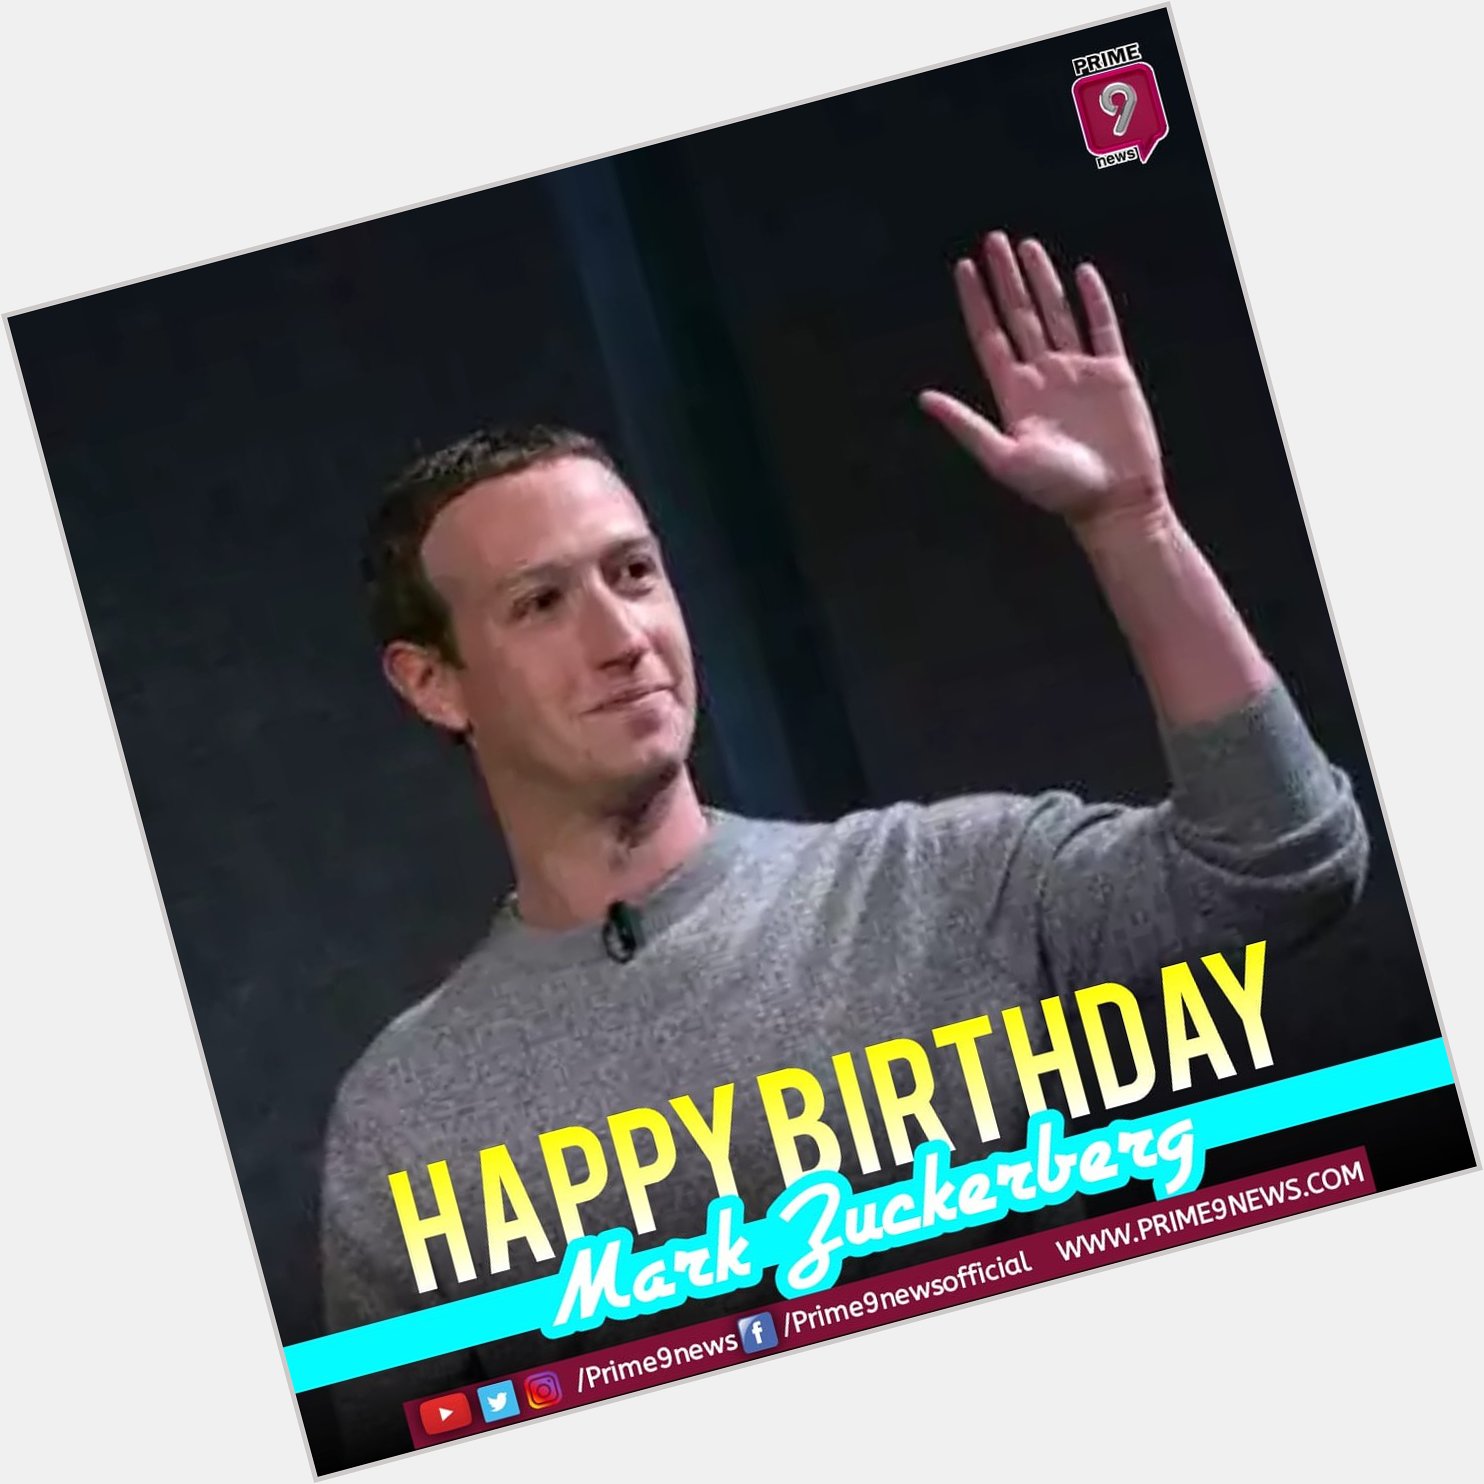 Wishing Mark Zuckerberg A Very Happy Birthday  